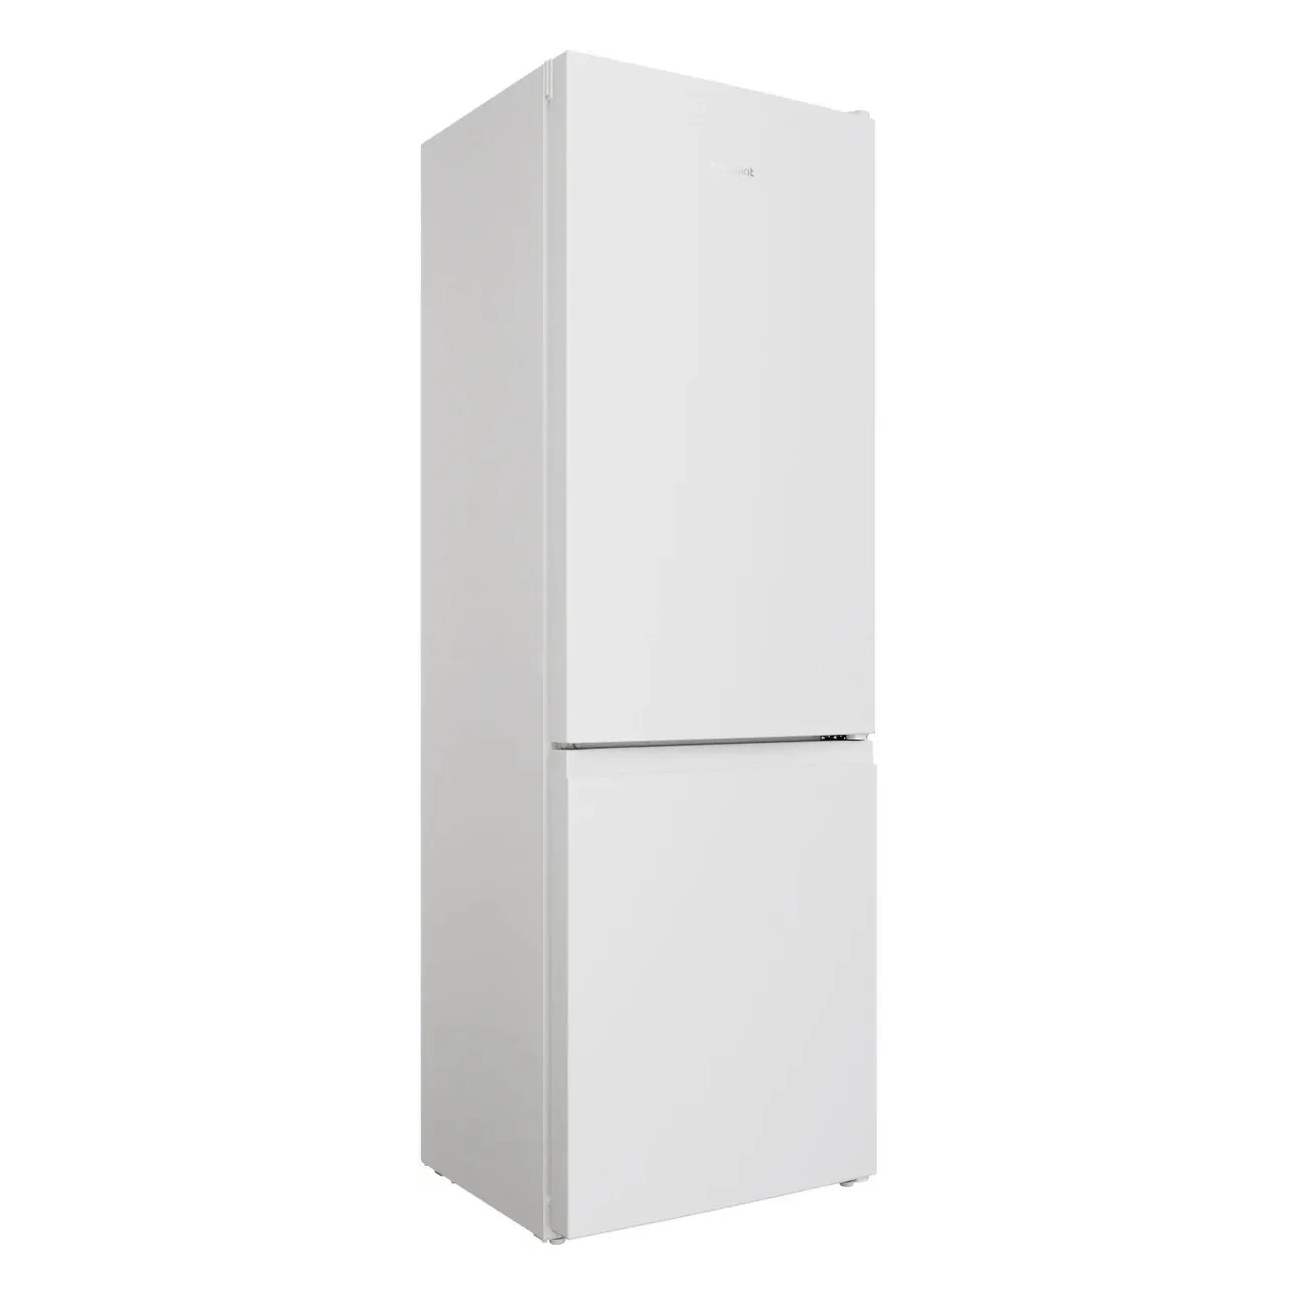 Холодильник HotPoint HT 4180 W белый, серебристый двухкамерный холодильник hotpoint ht 5201i w белый